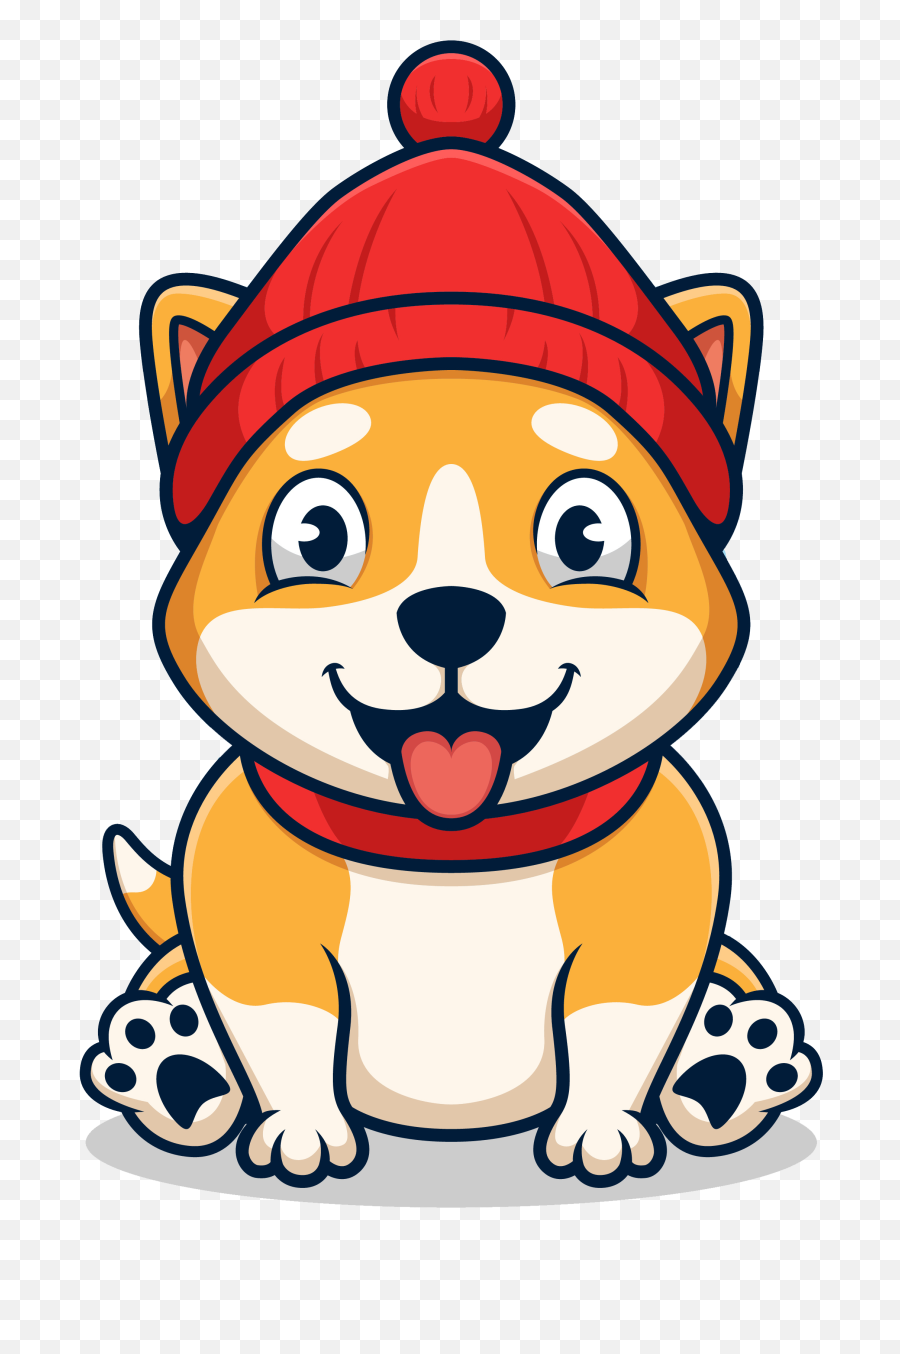 Baby Corgi - Baby Doge Coin In Corgi Way Emoji,Corgi Emoticon